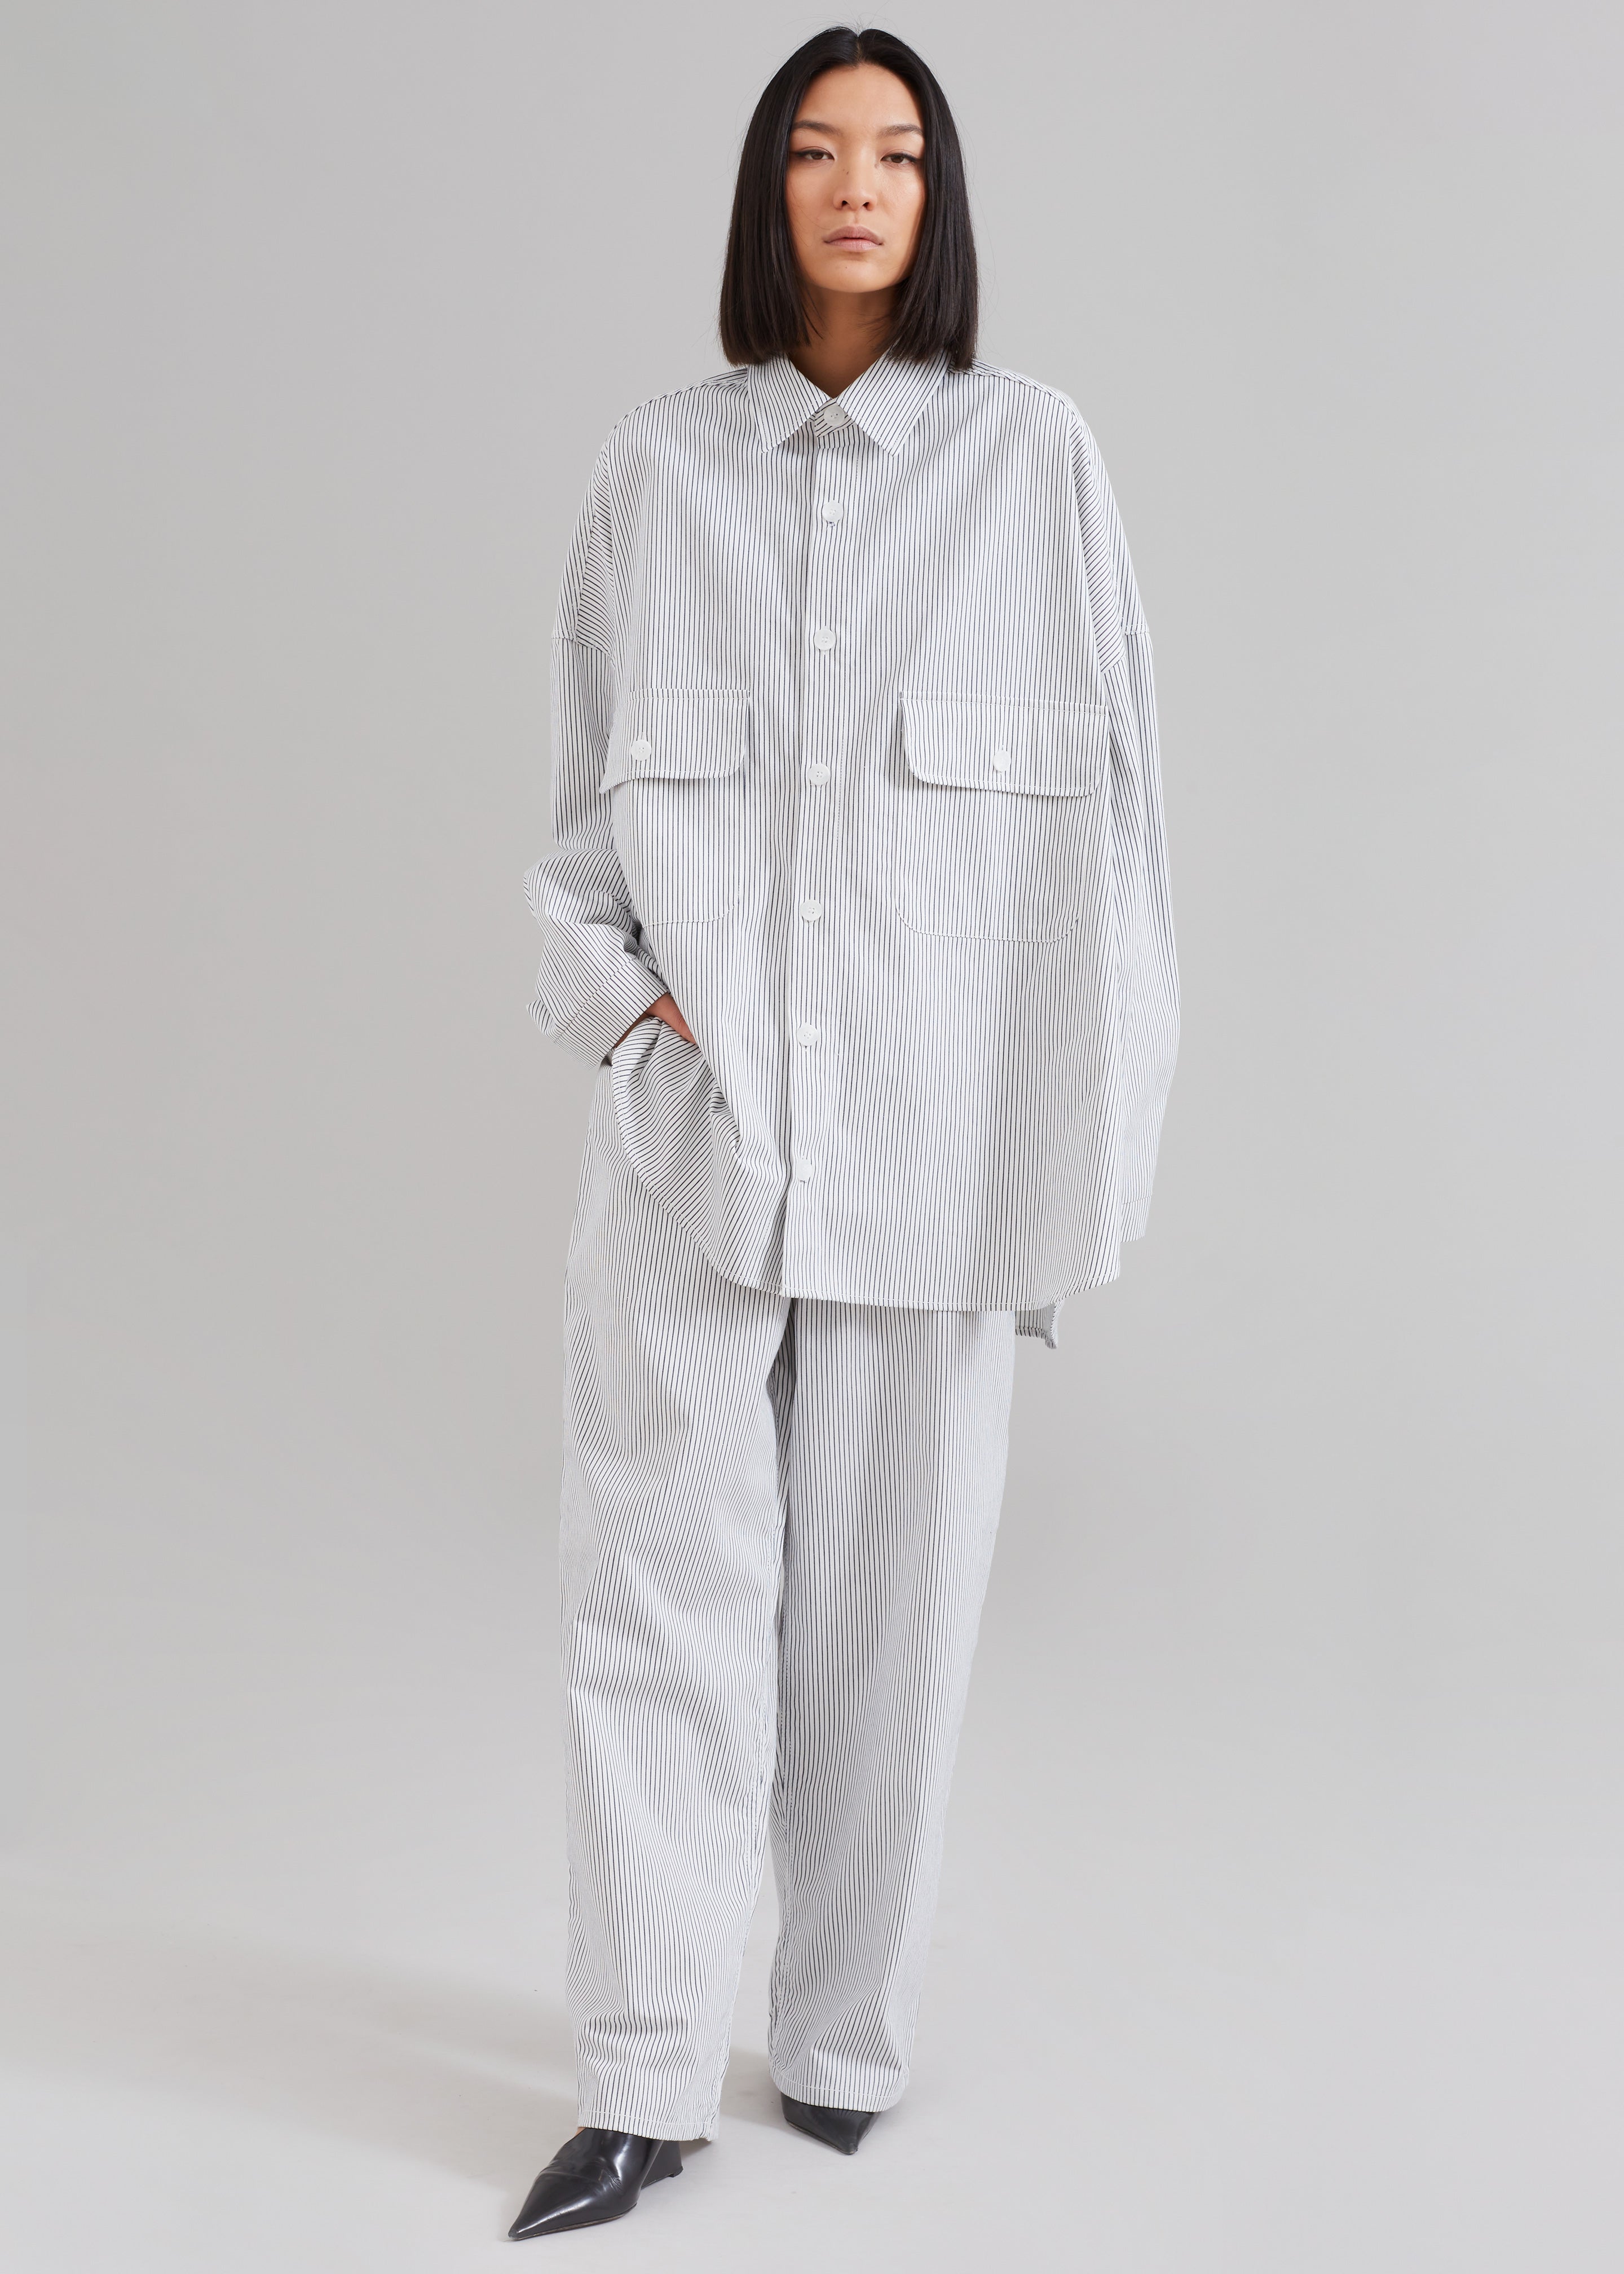 Kaline White Pocket Shirt - Navy Stripe - 8